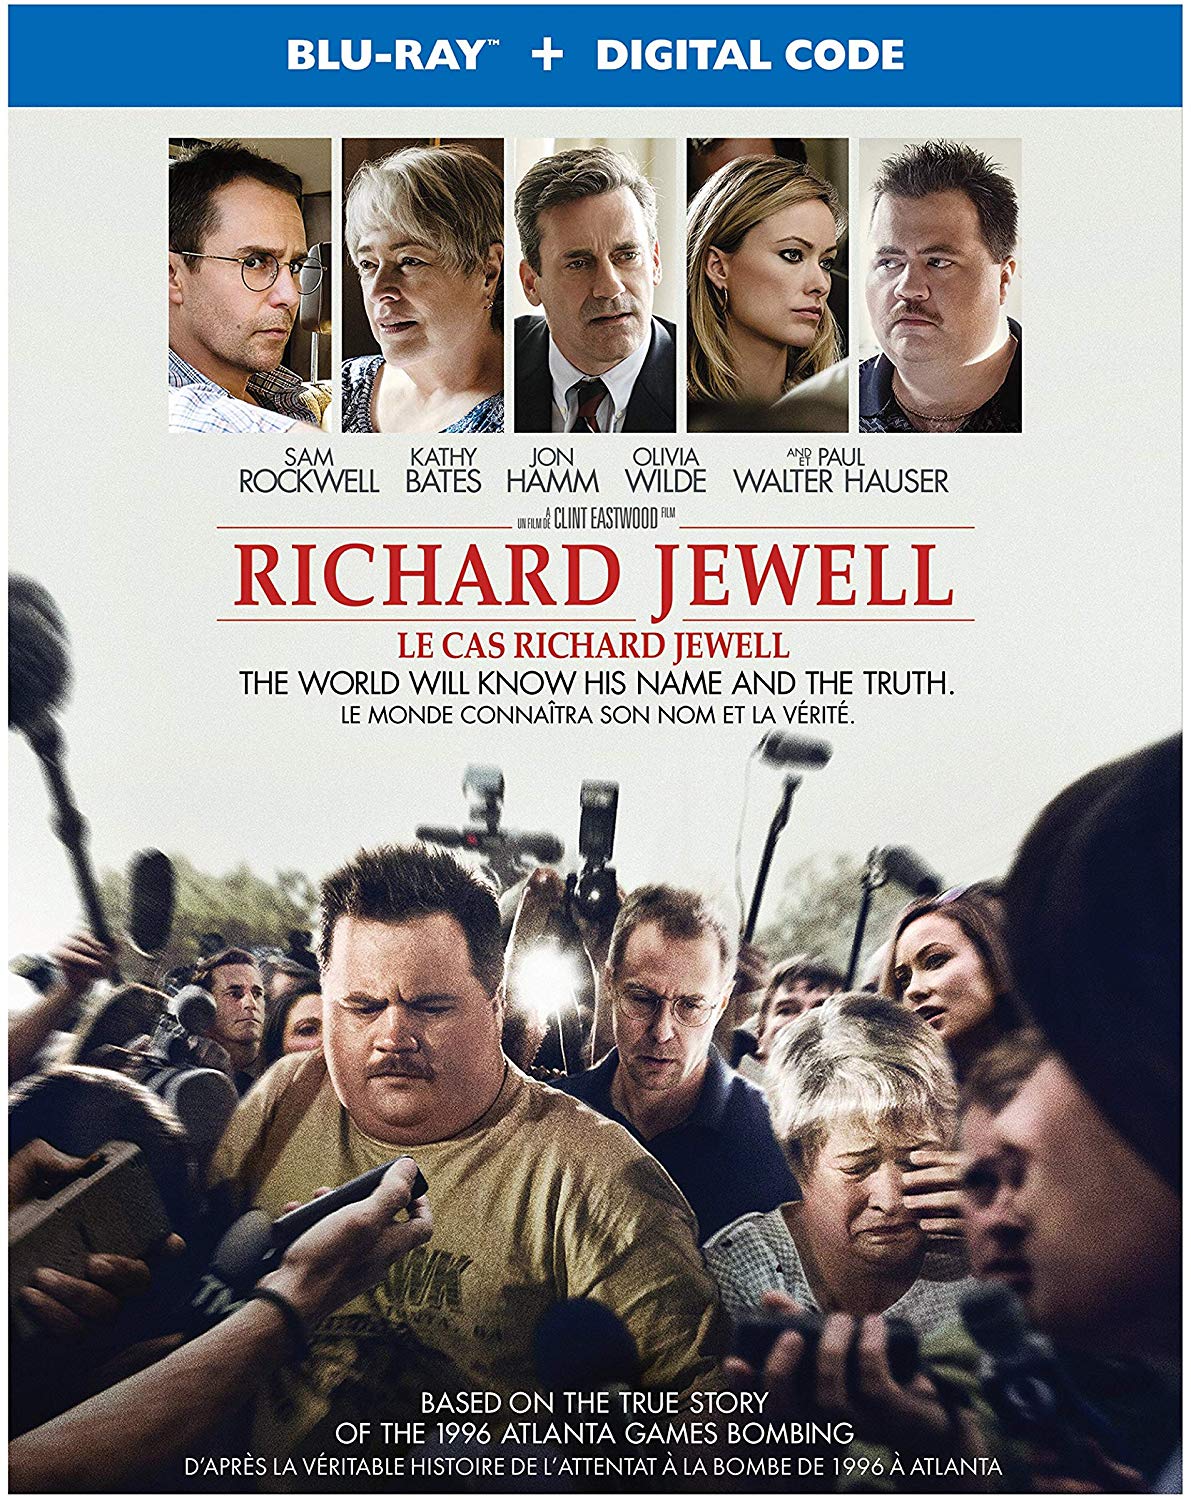 Richard Jewell Blu-ray